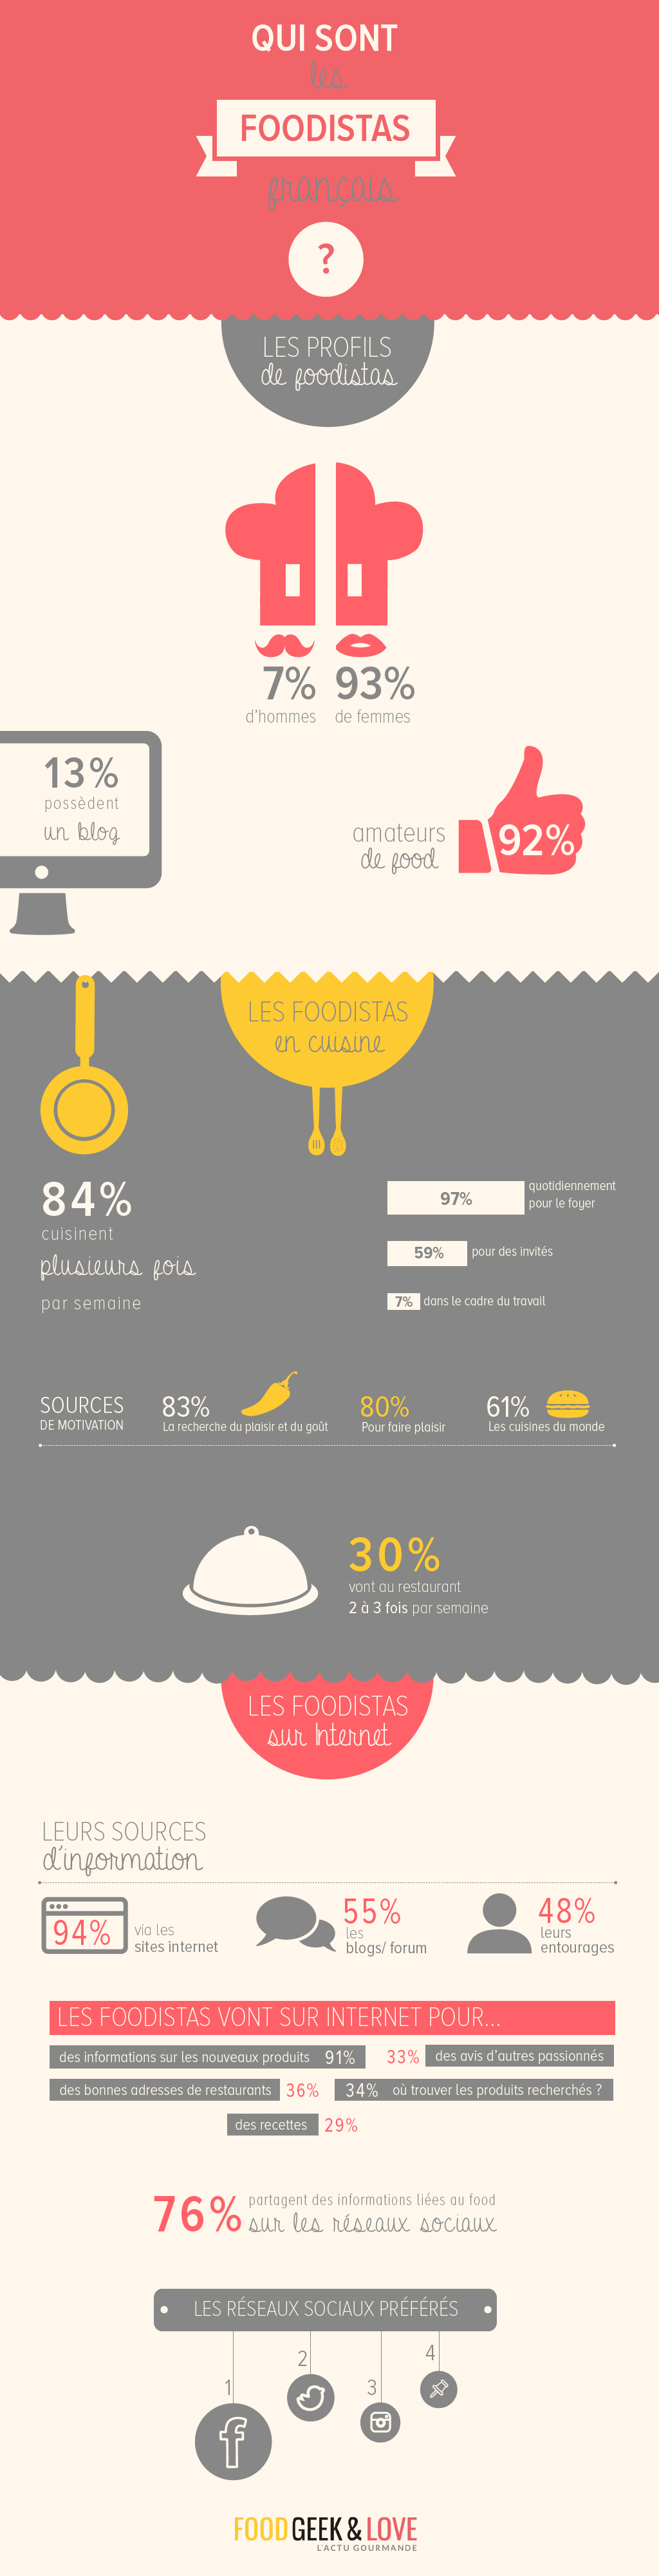 Infographie-foodista